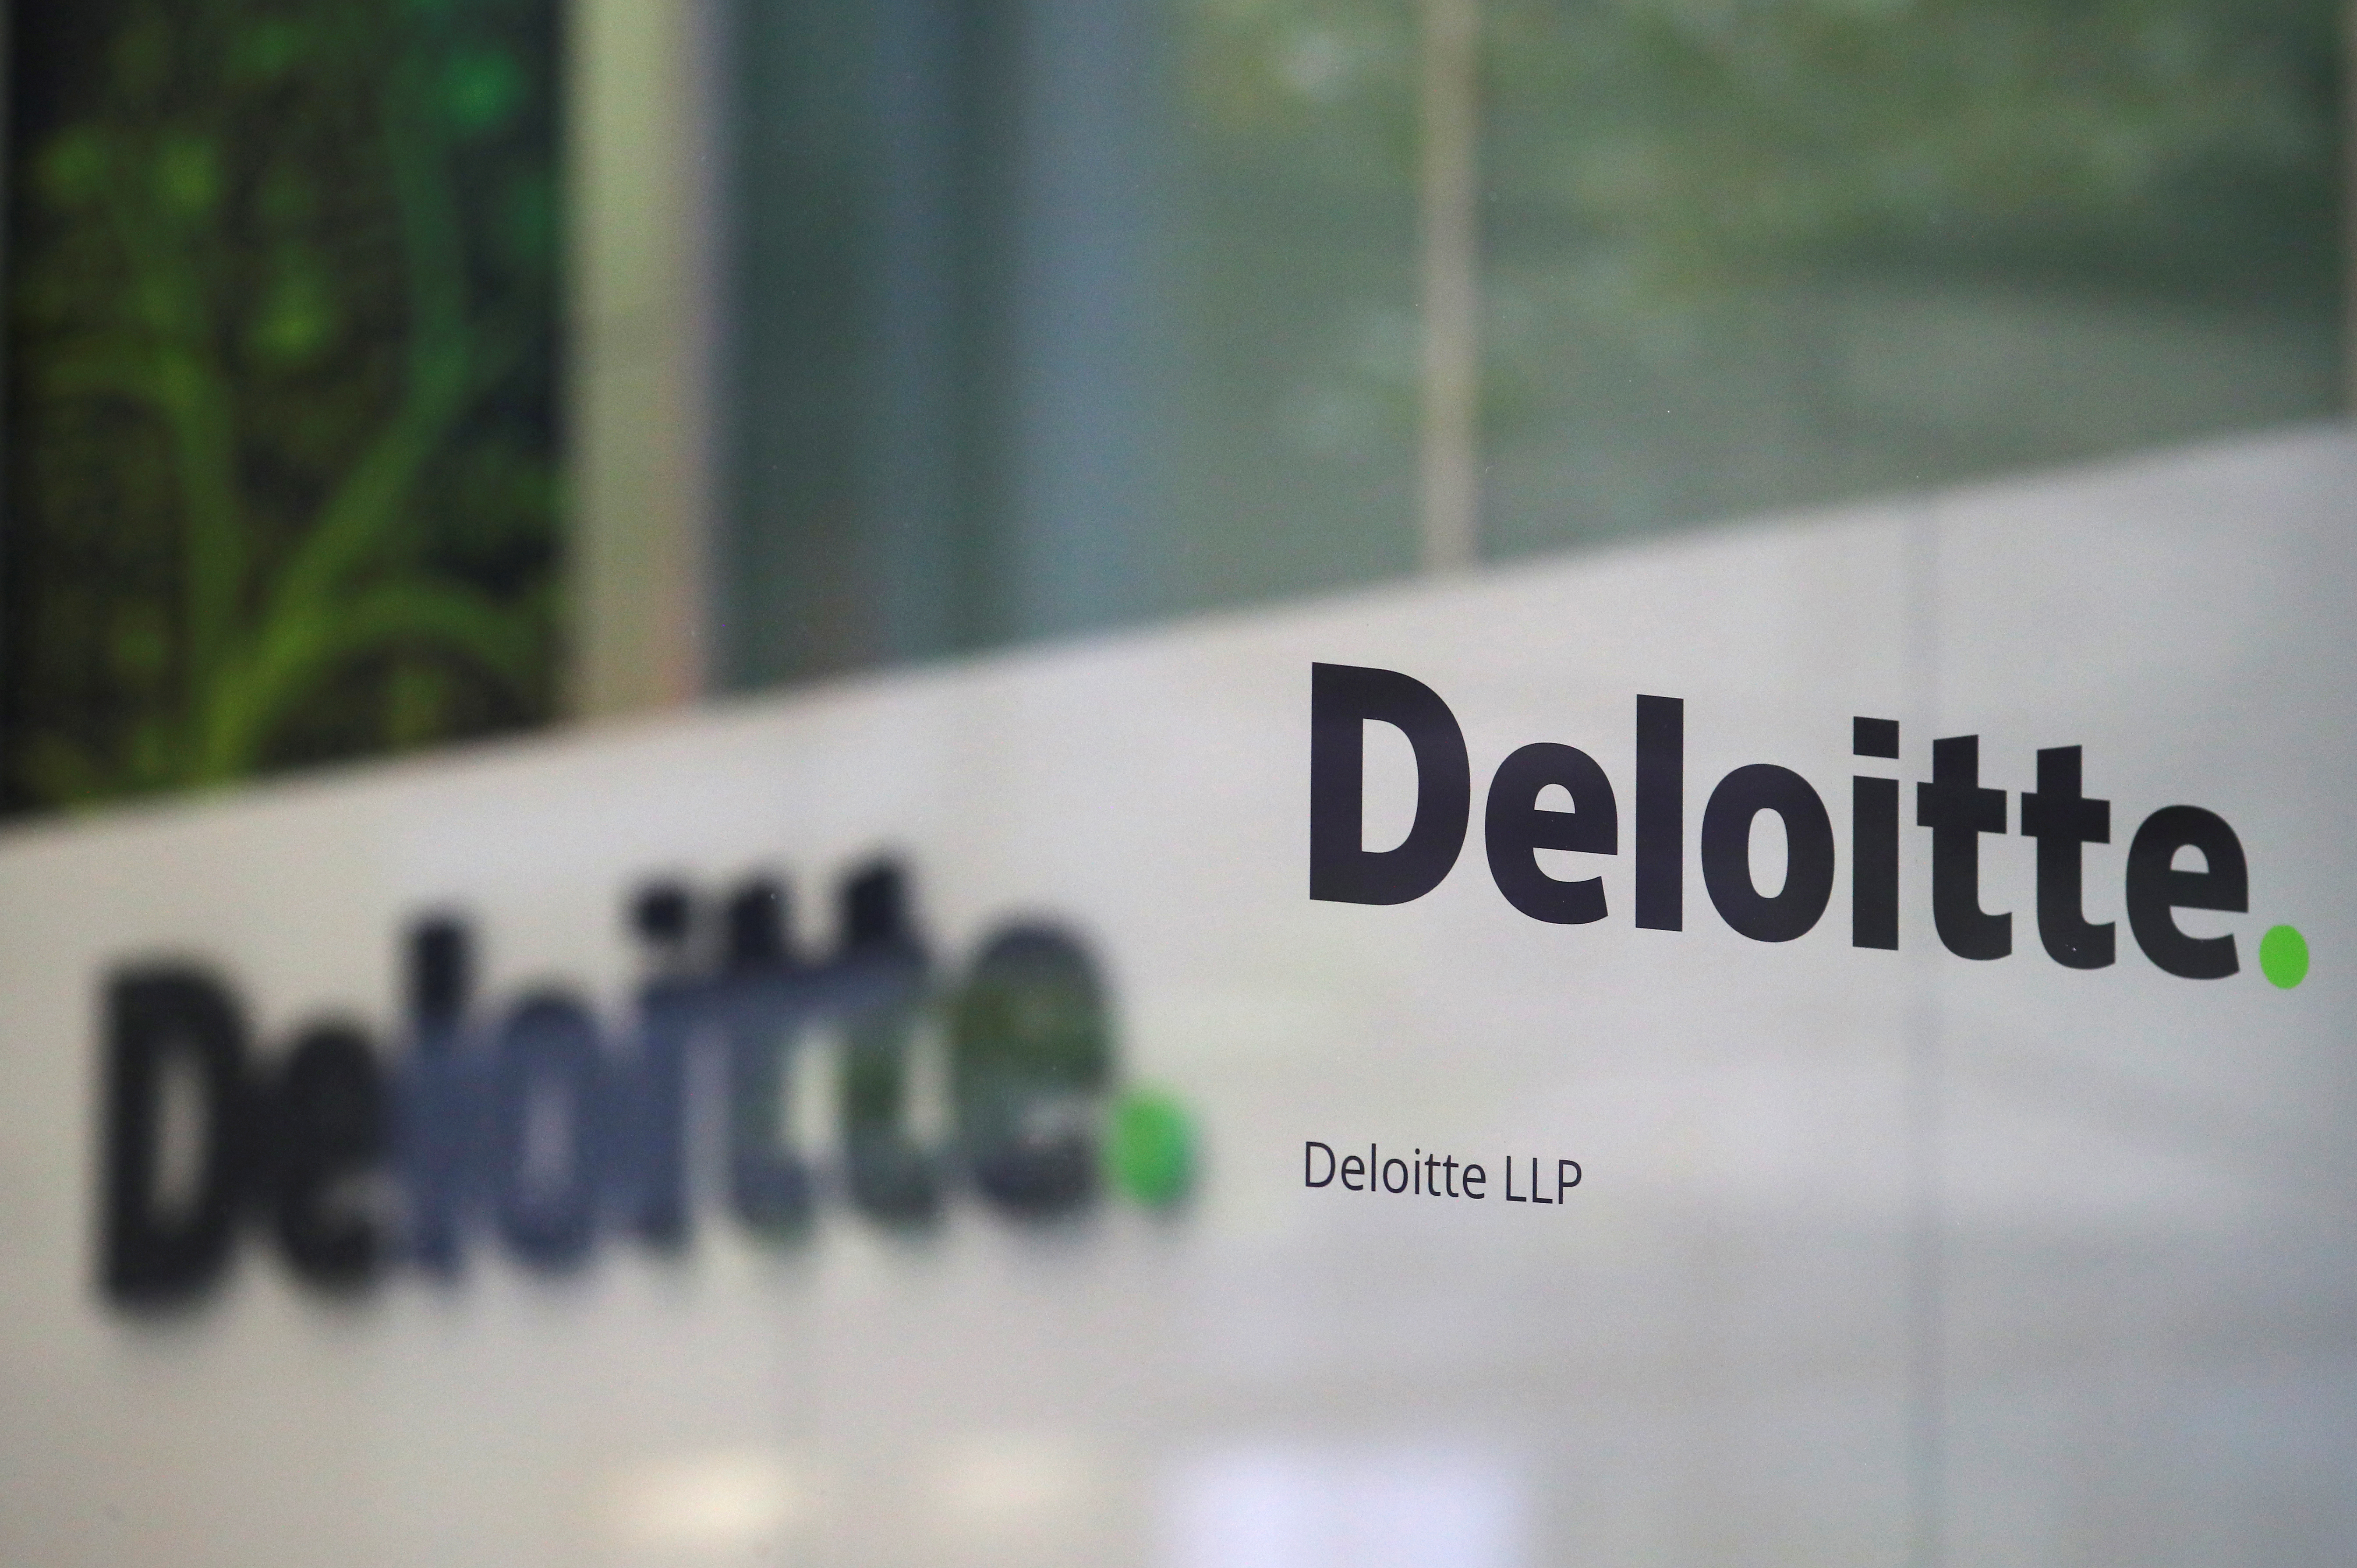 Offices of Deloitte are seen in London